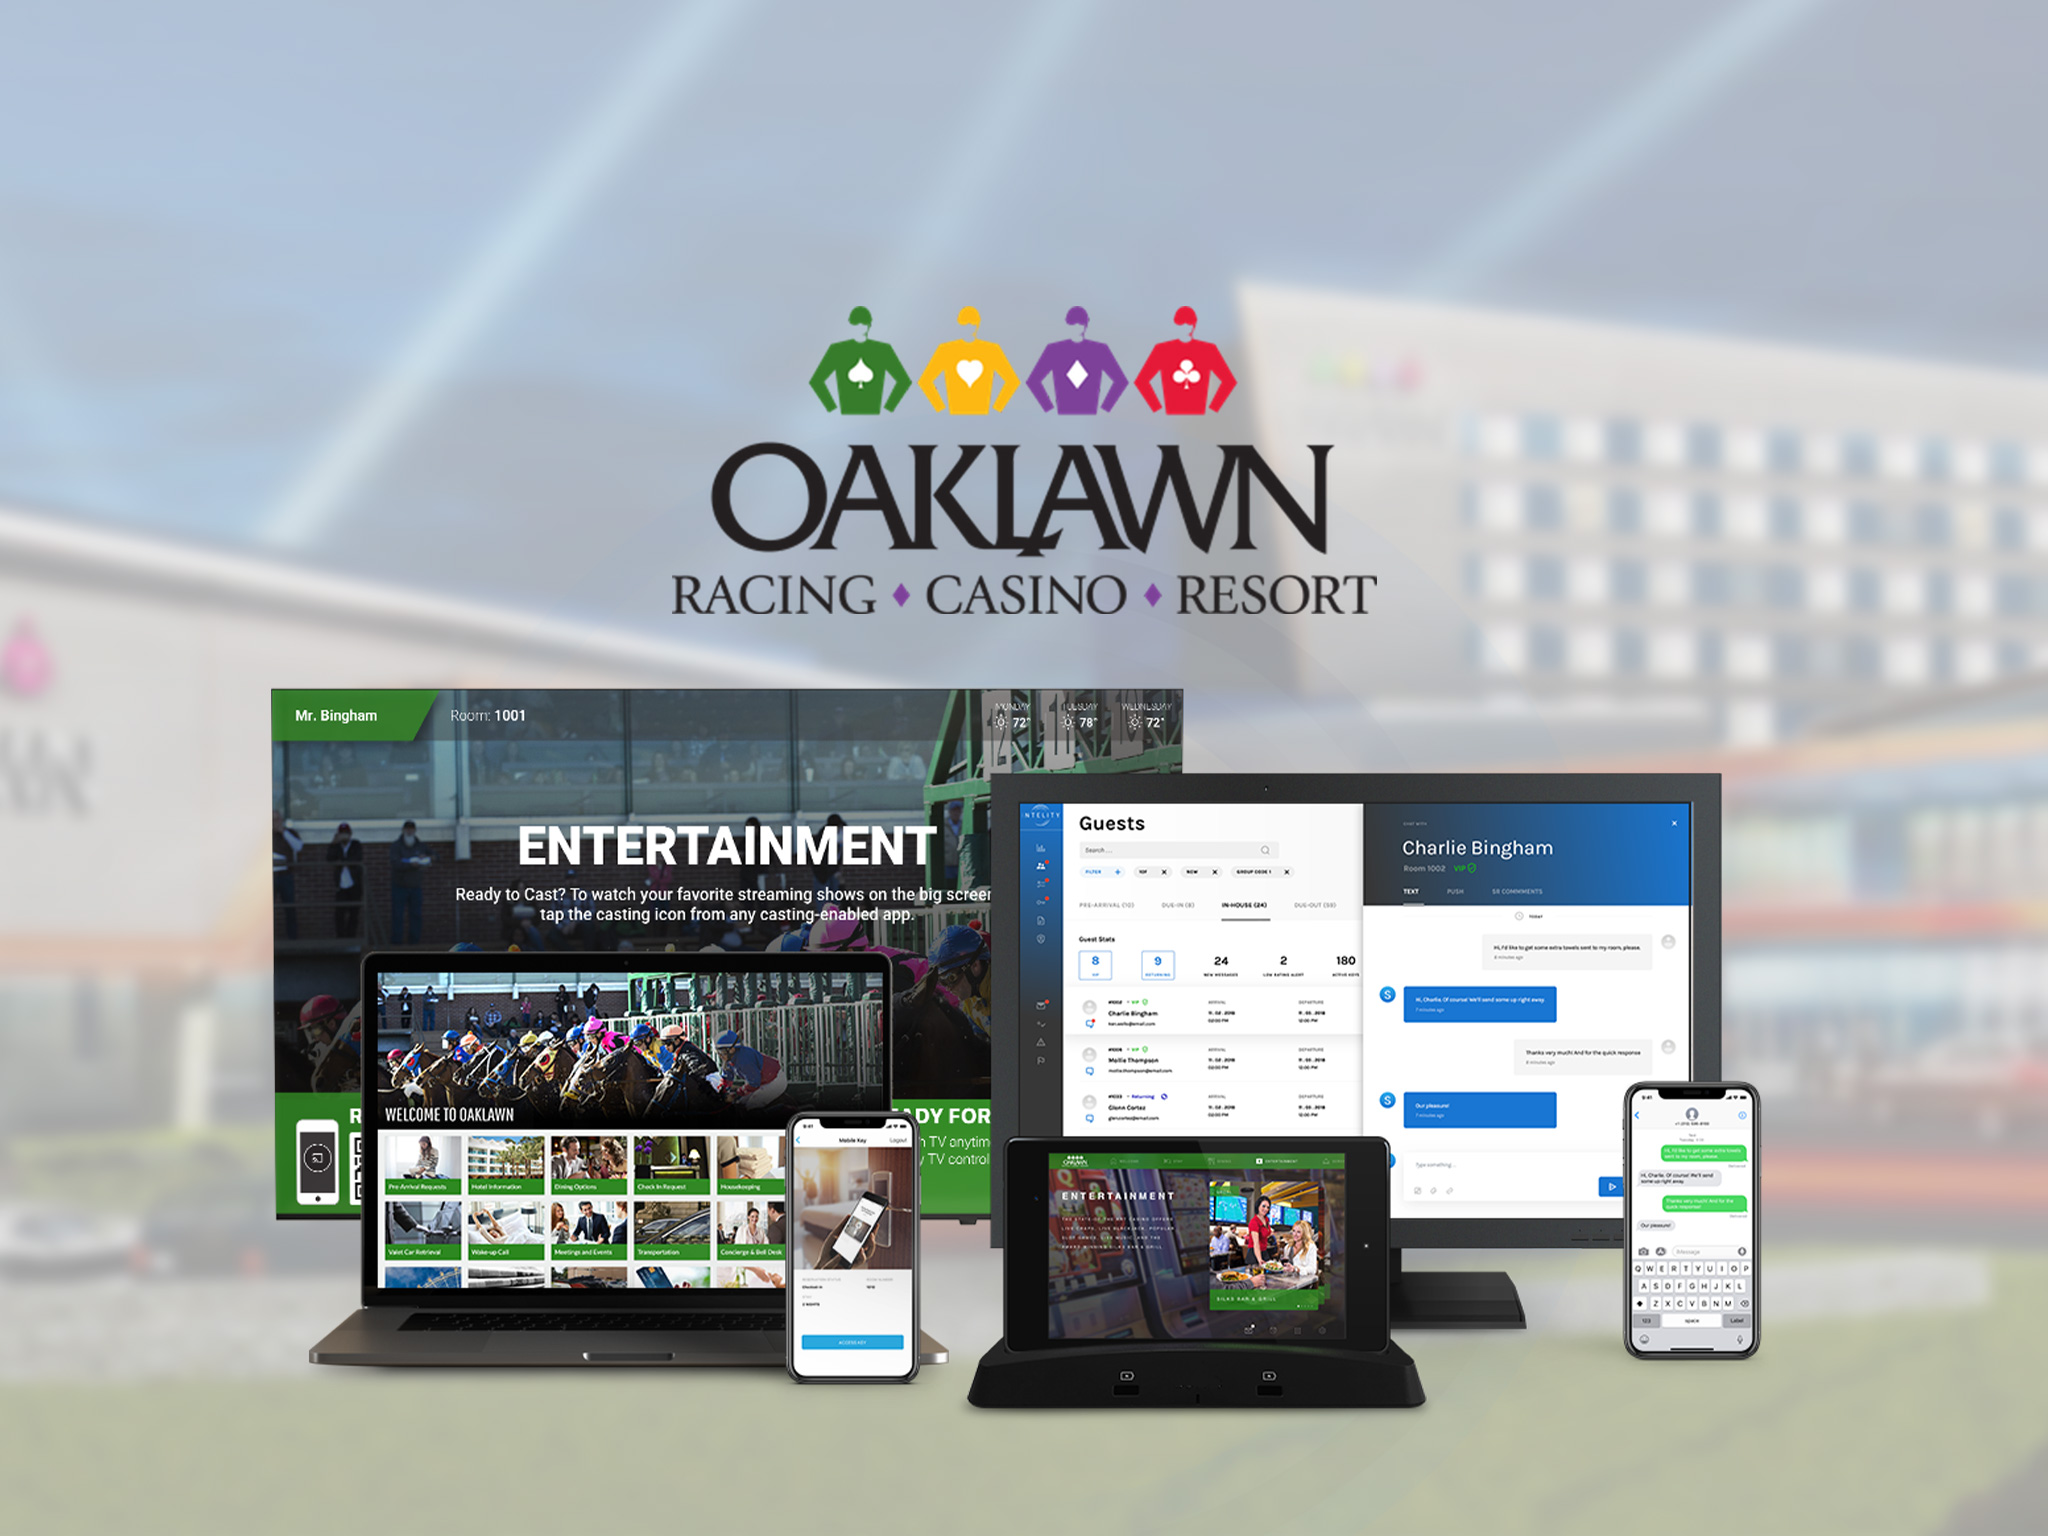 oaklawn racing casino resort 2018 events